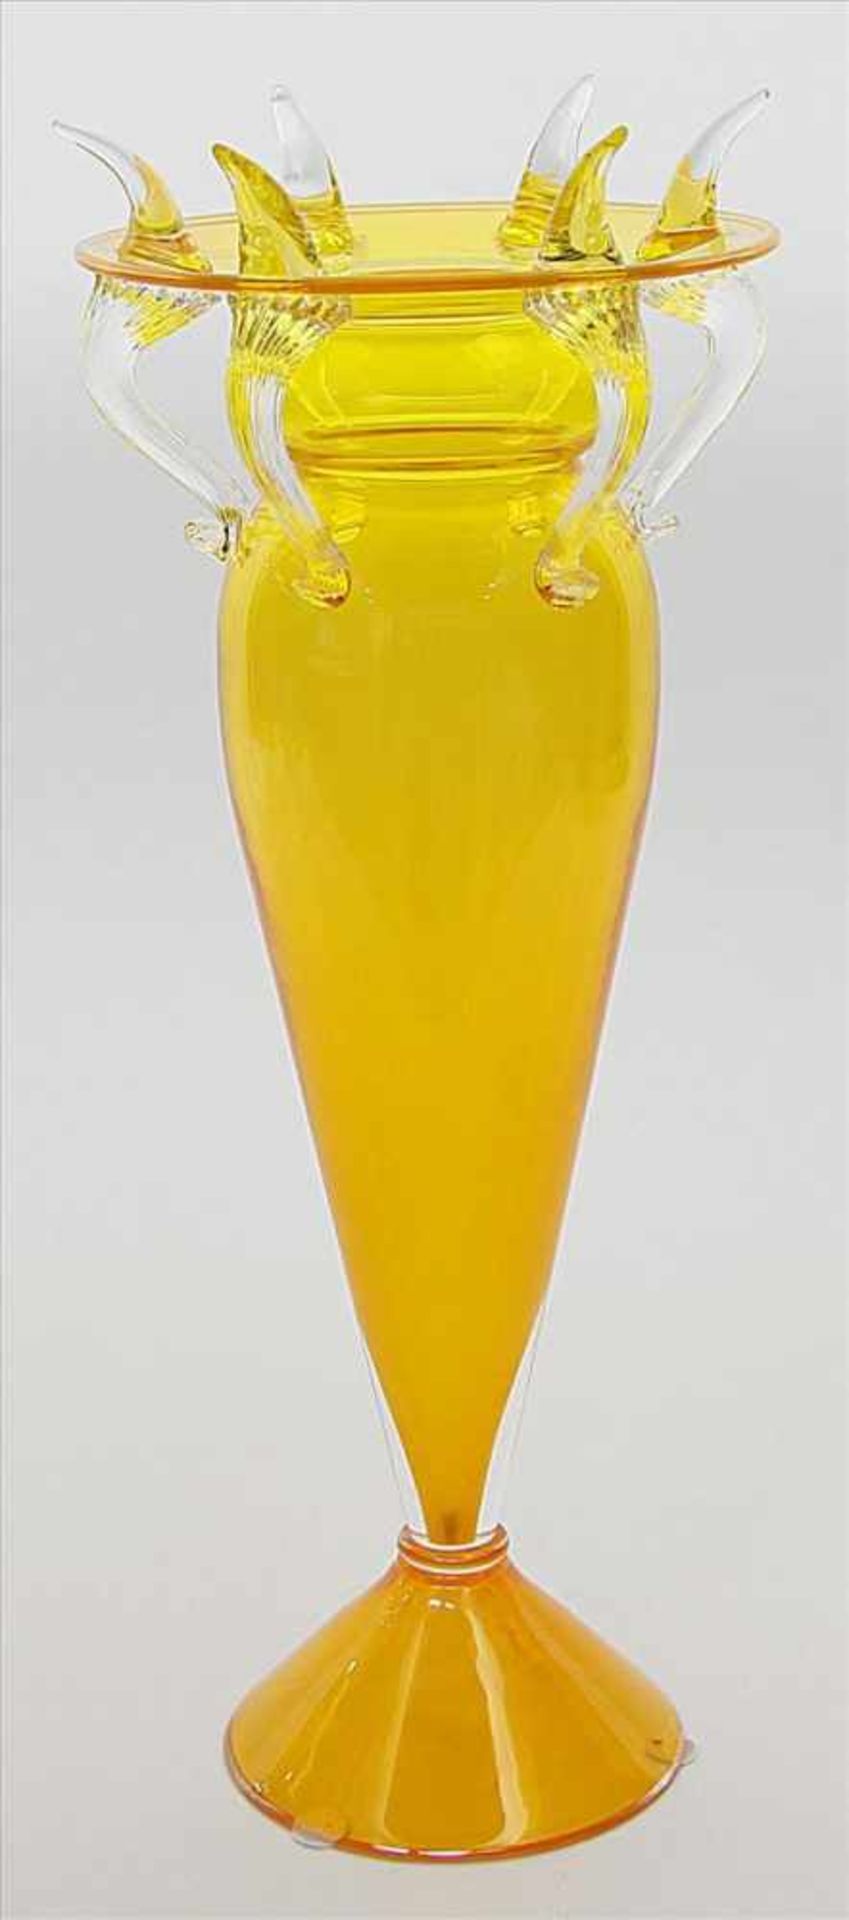 Sipek, Borek (1949 Prag 2016)Hohe Vase "Florian", aus der Serie "follies". Farbloses Glas mit